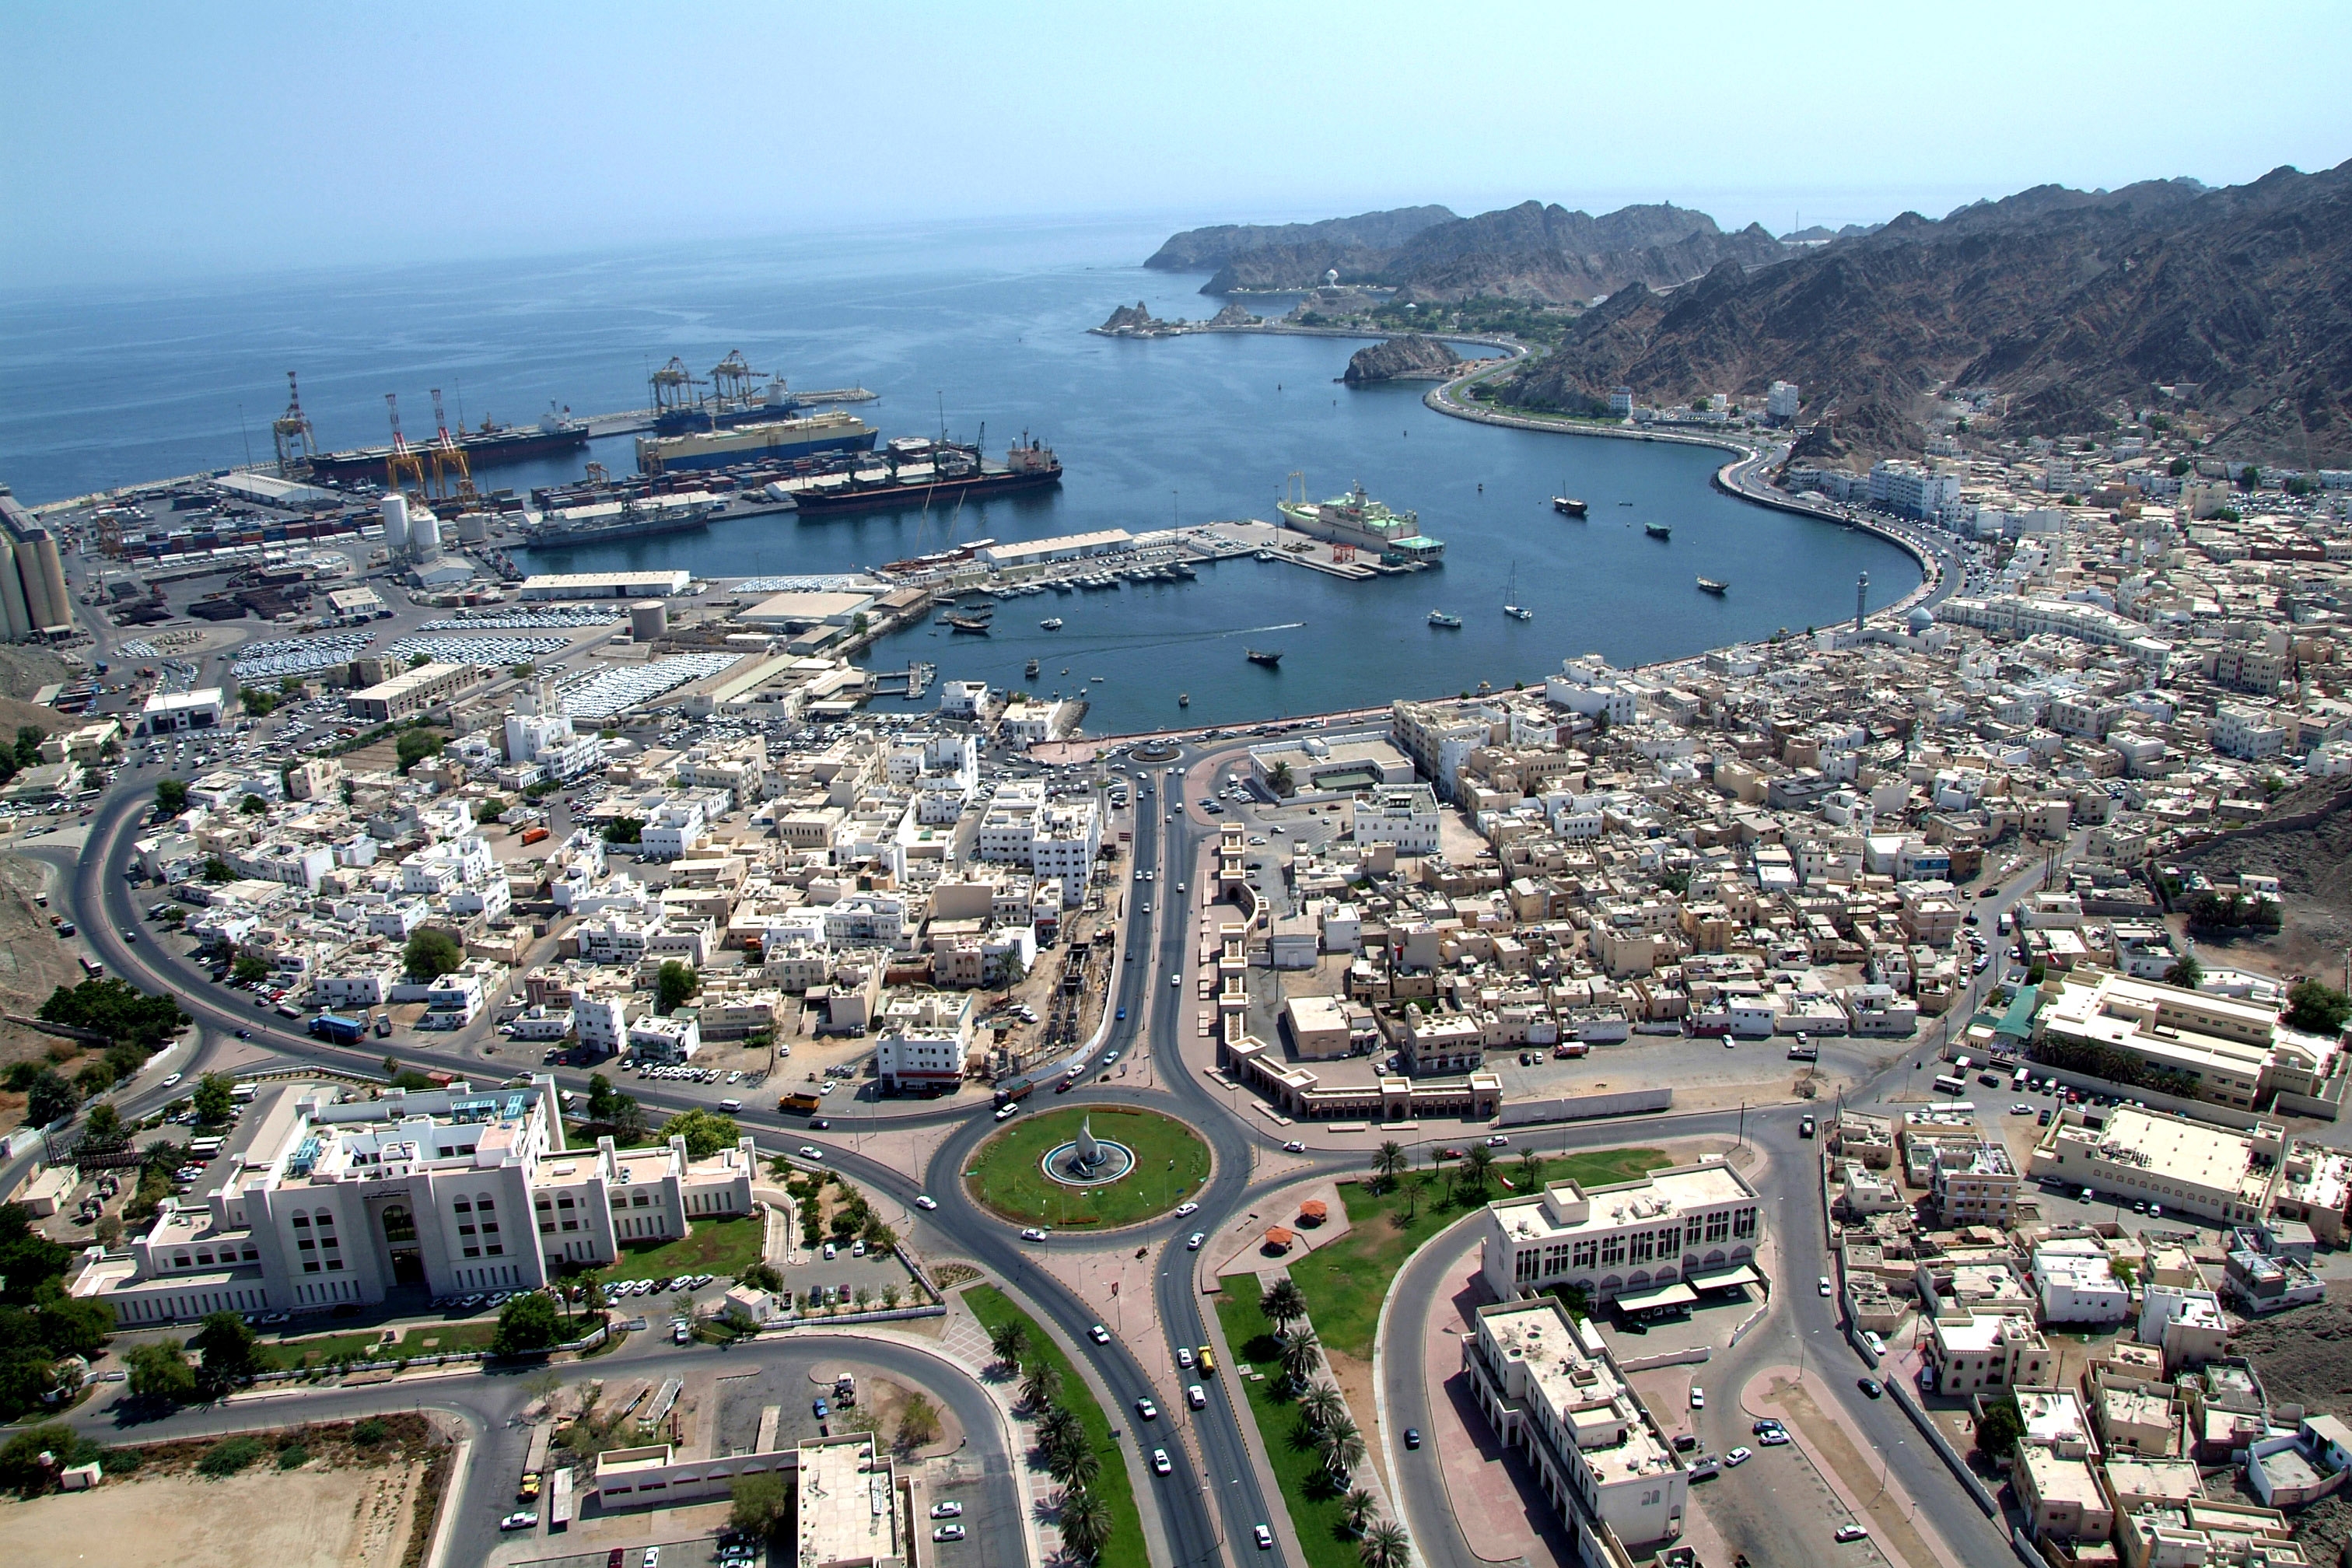 Strategic location has made Muscat a vital trade hub